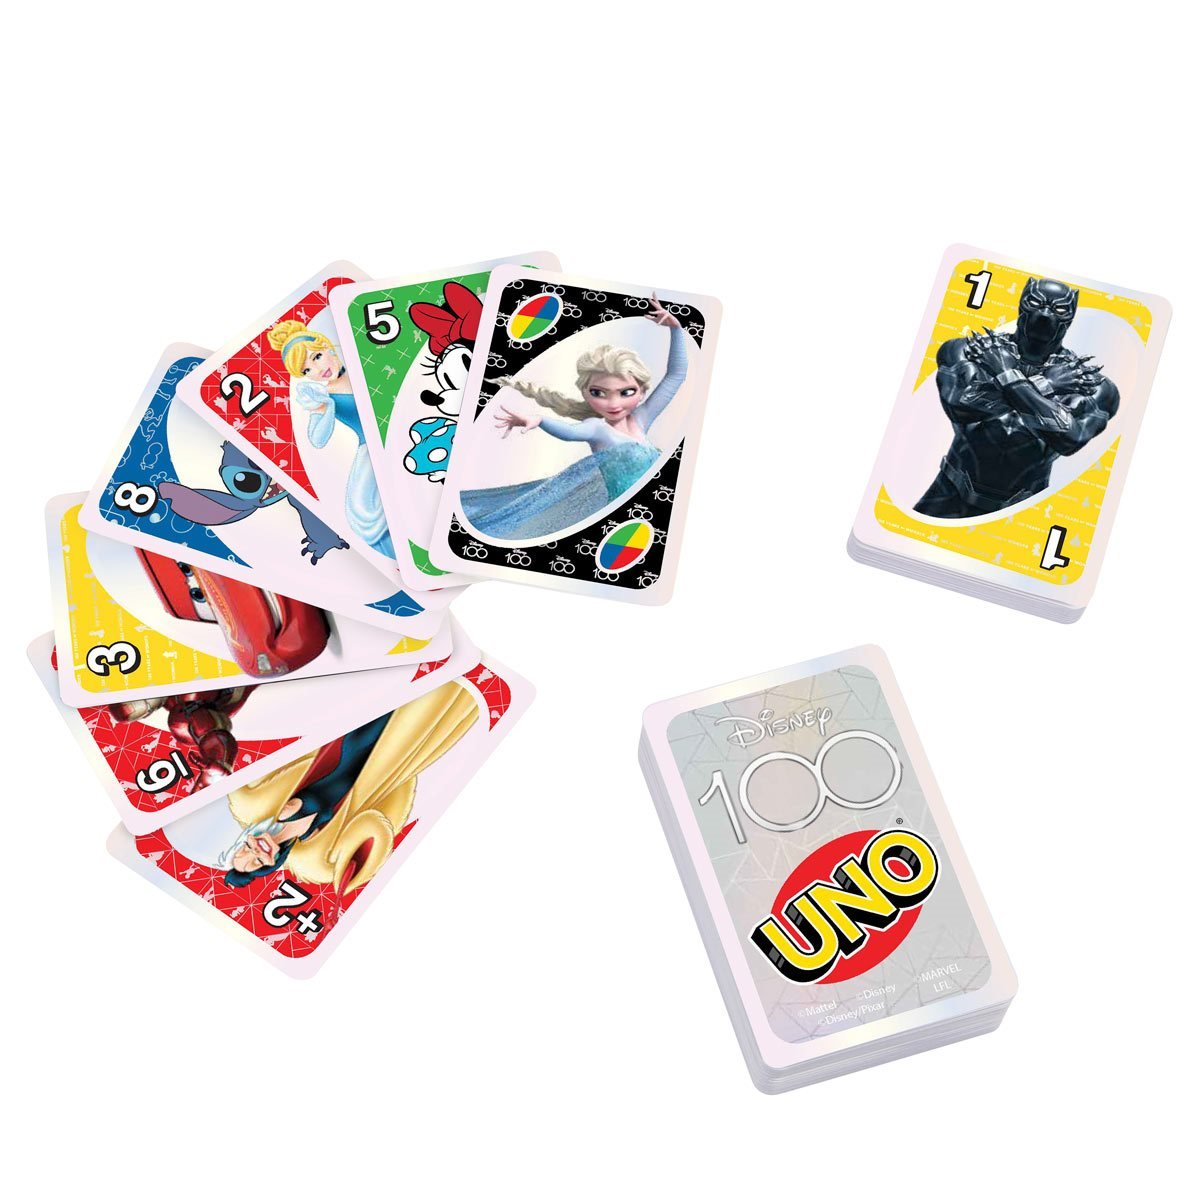 Uno - UNO Cards Game